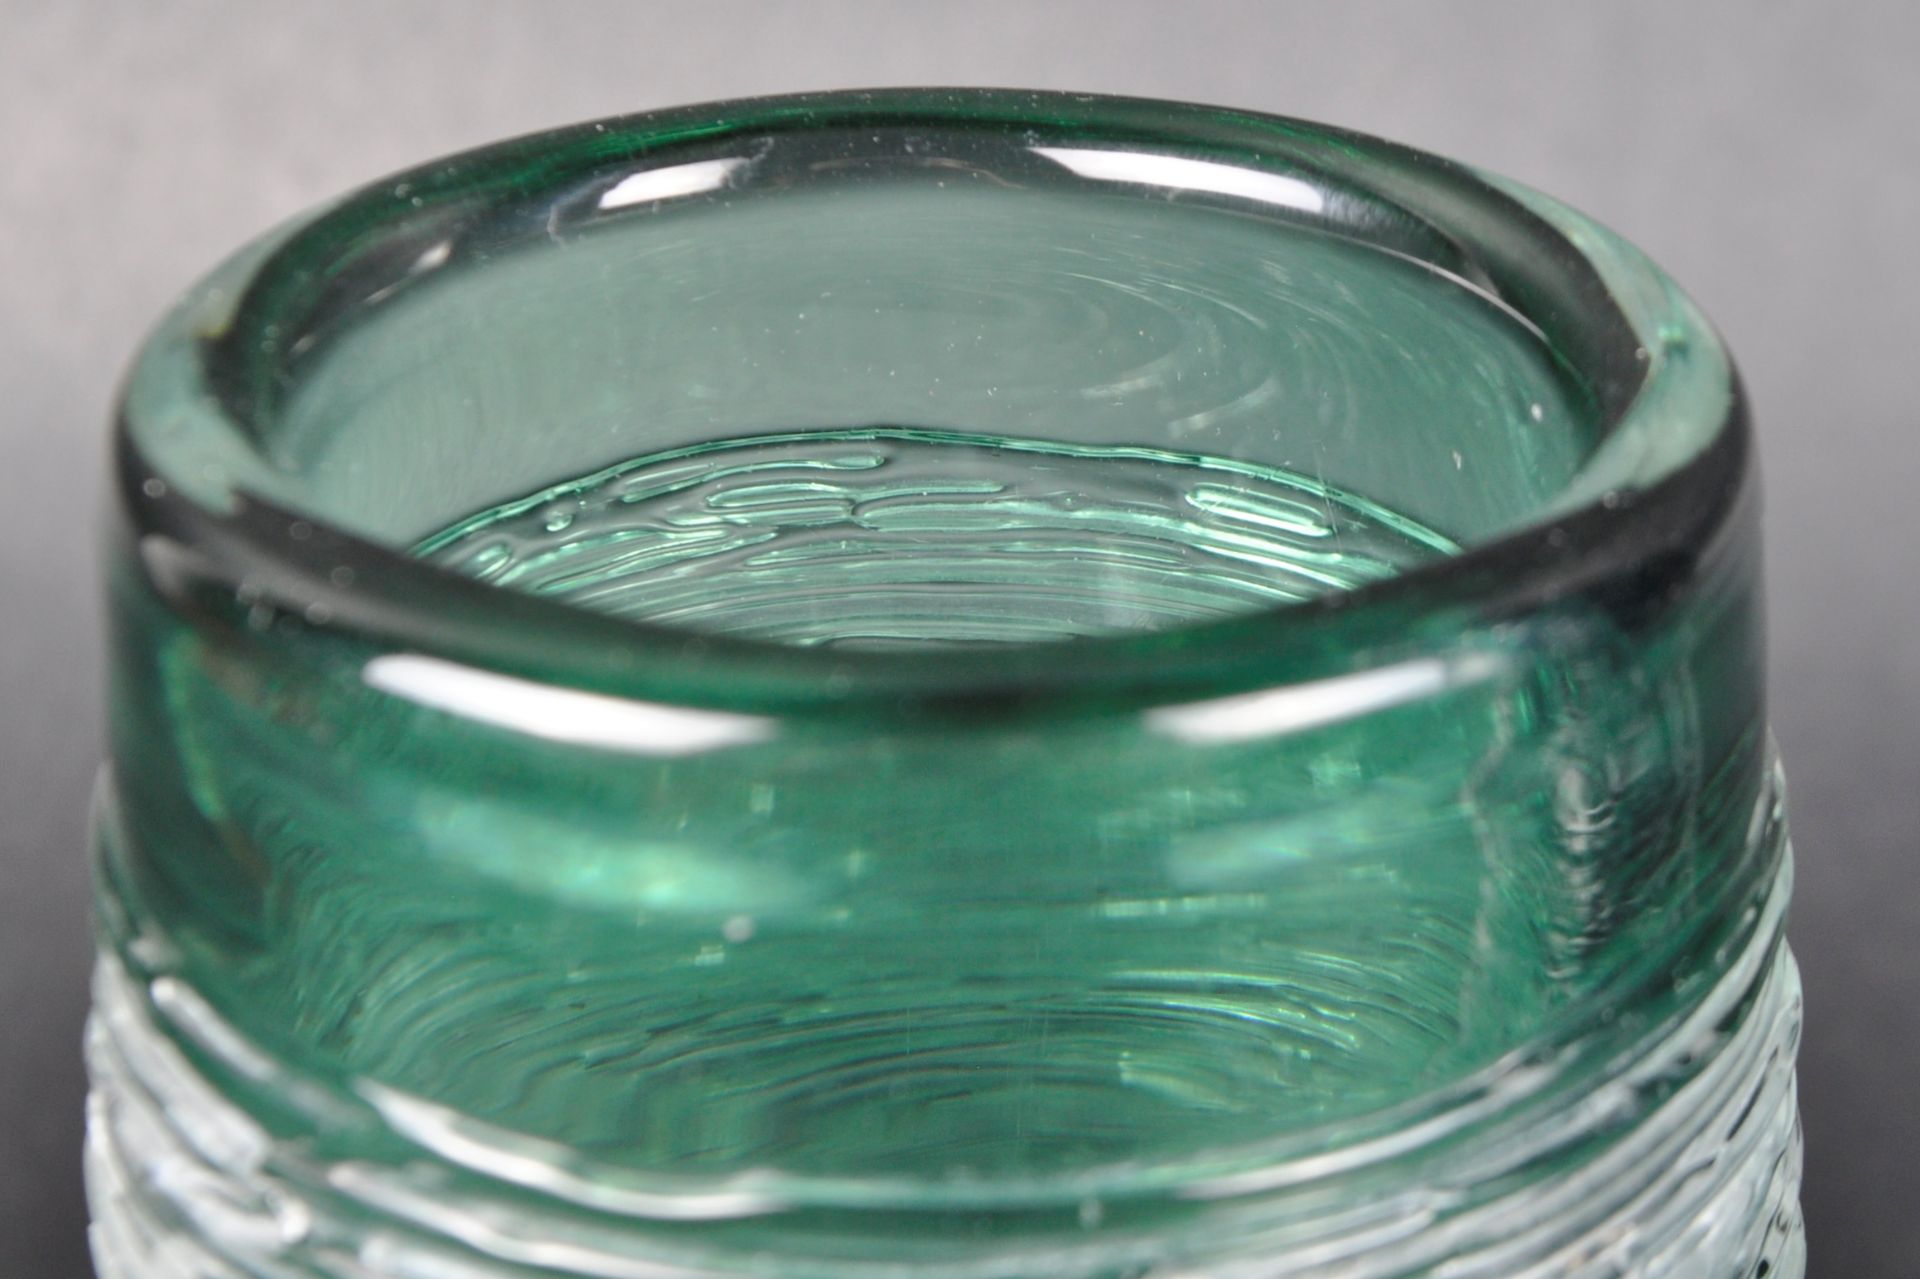 BENGT EDENFALK FOR SKRUF - A TRIO OF SPUN STUDIO ART GLASS VASES - Image 7 of 9